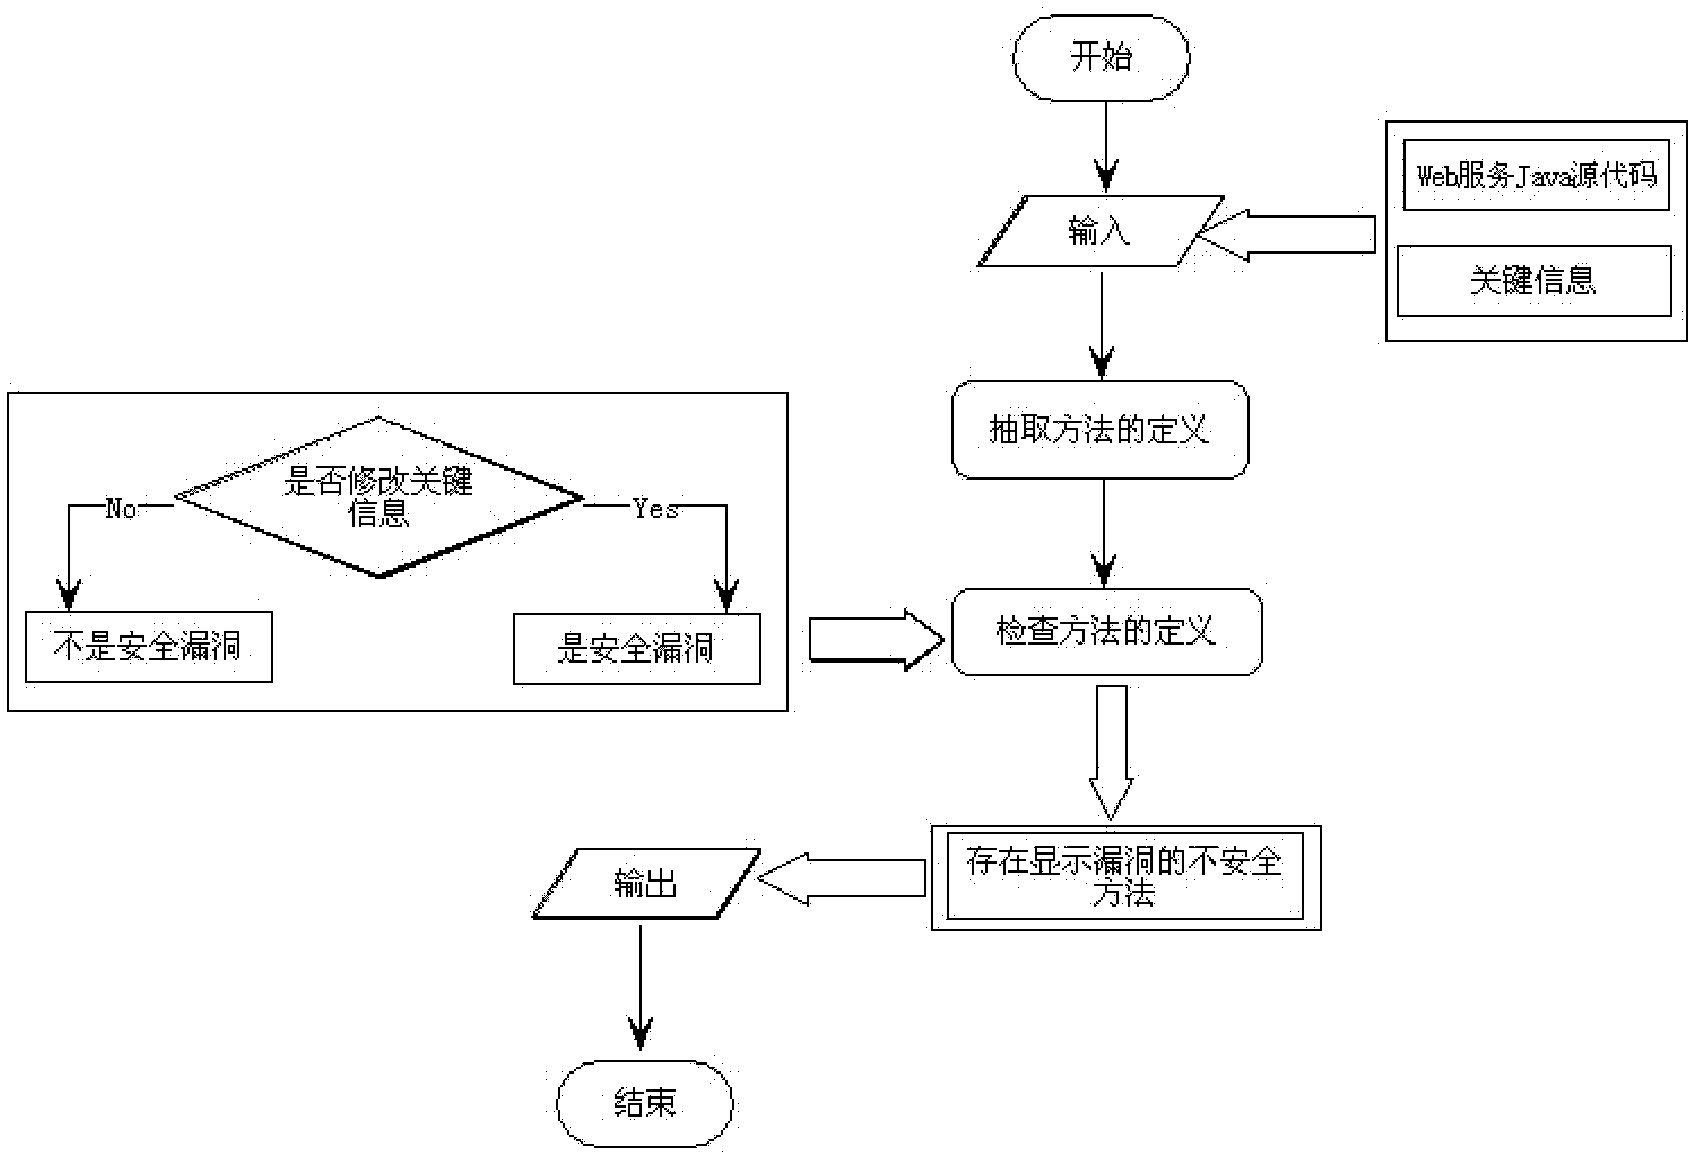 Web service security analysis method based on program slicing technique